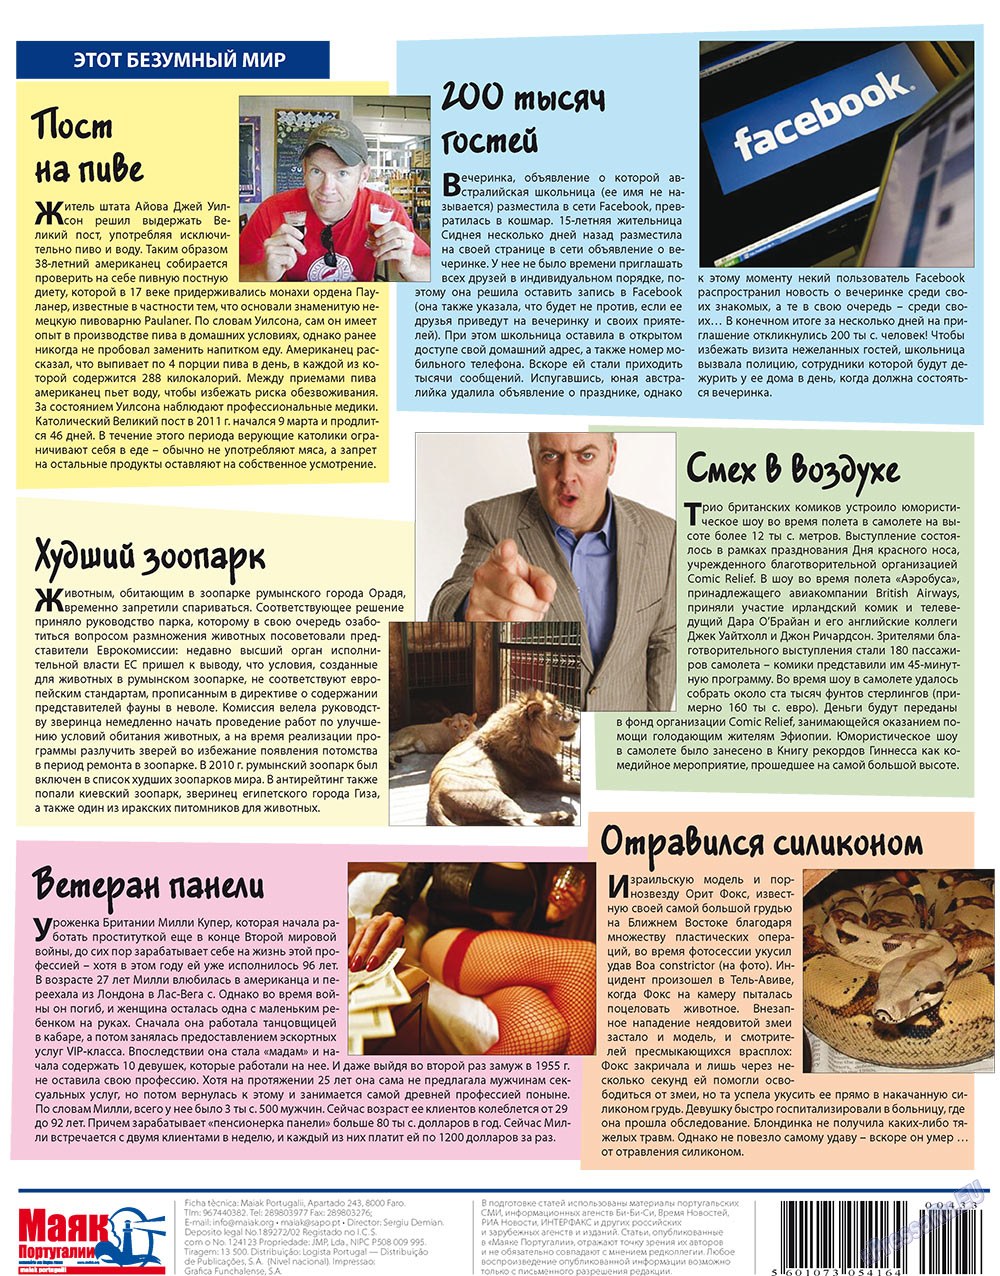 Маяк Португалии, газета. 2011 №433 стр.40